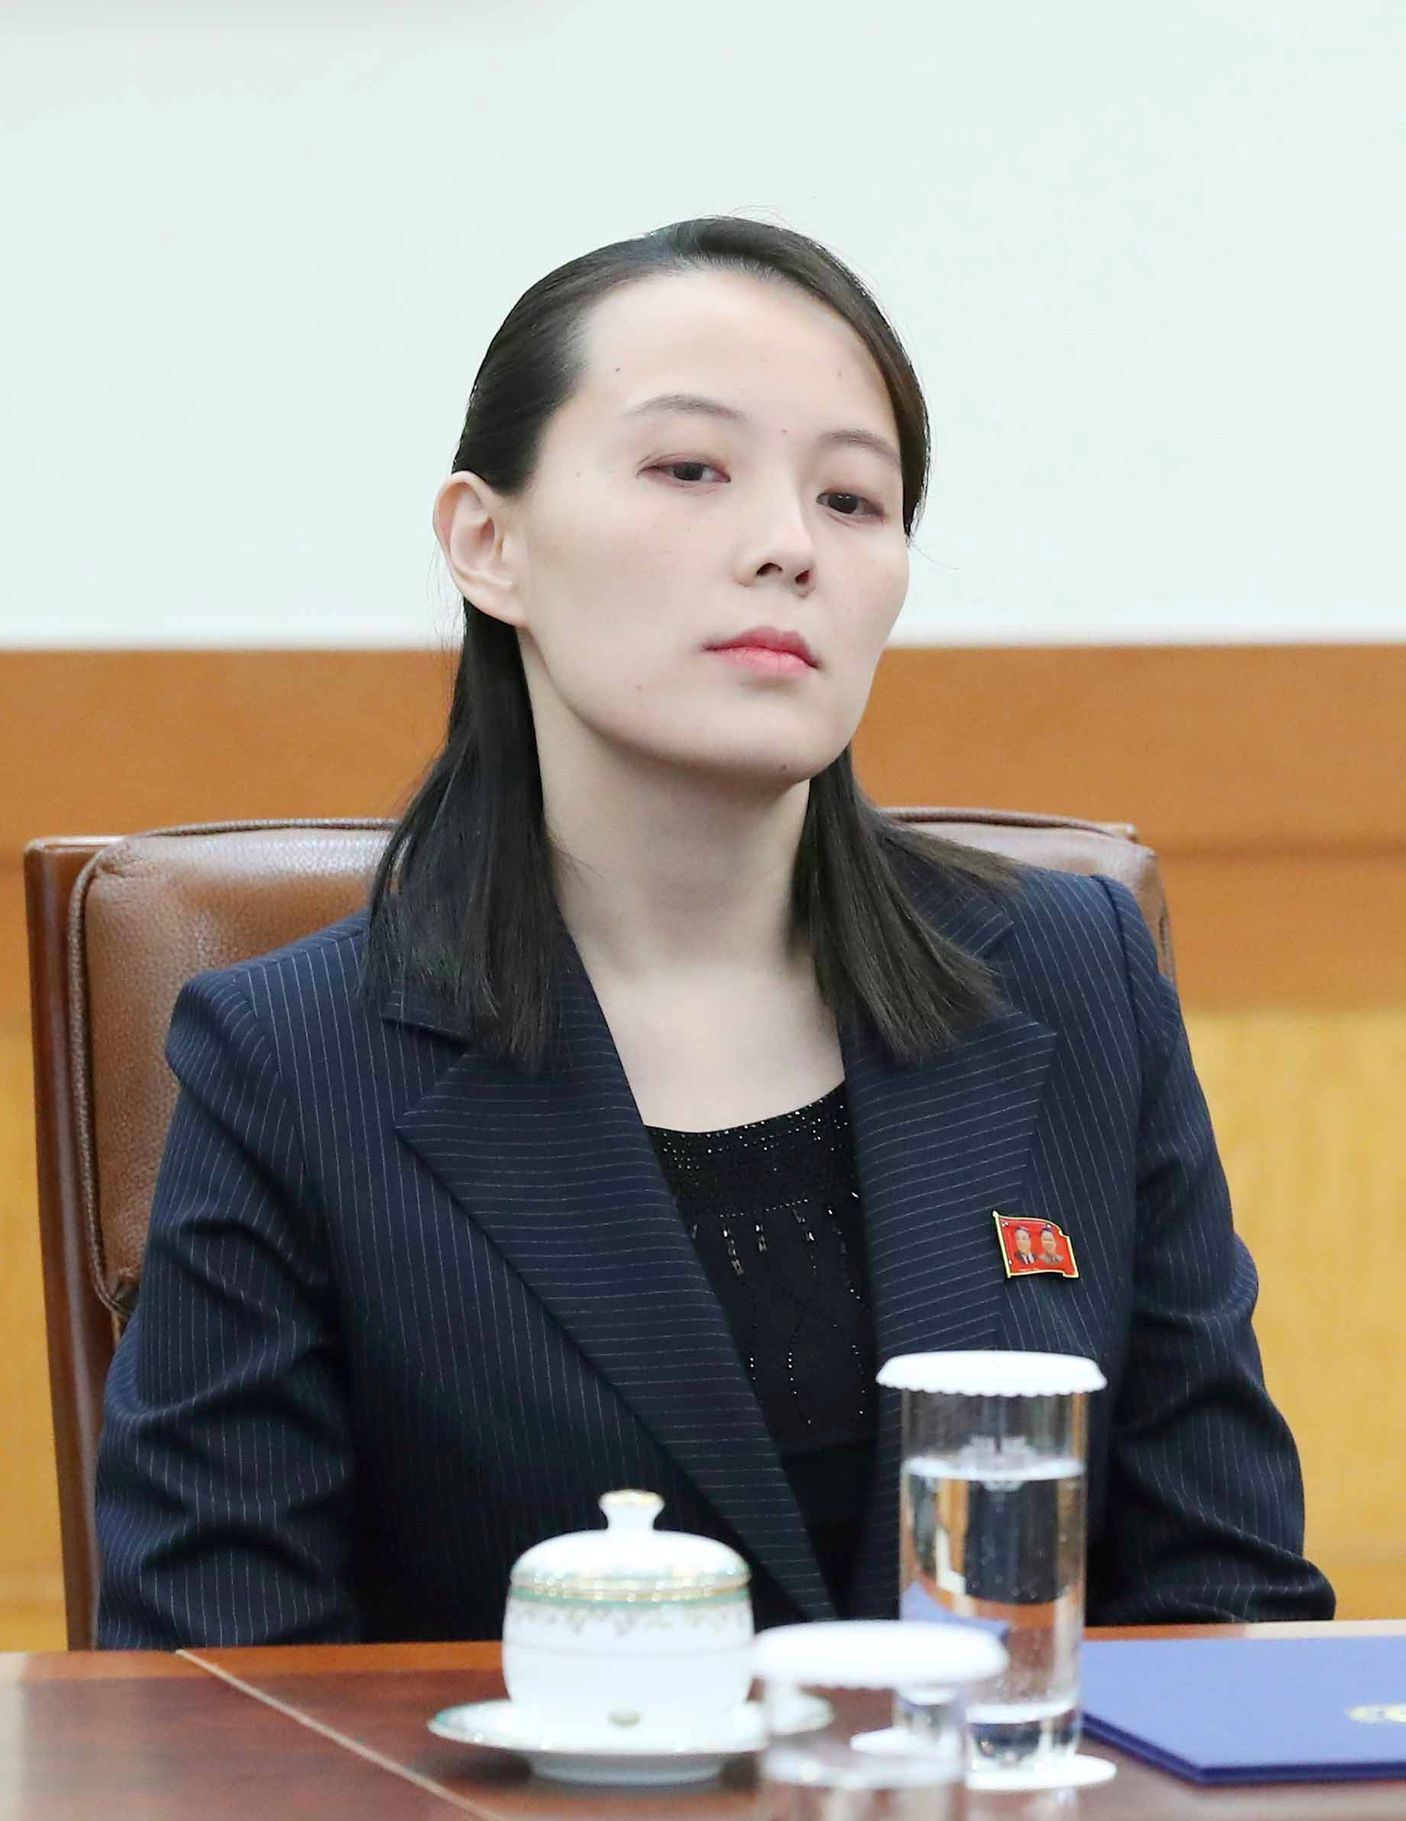 Sestra Kim Čong-una